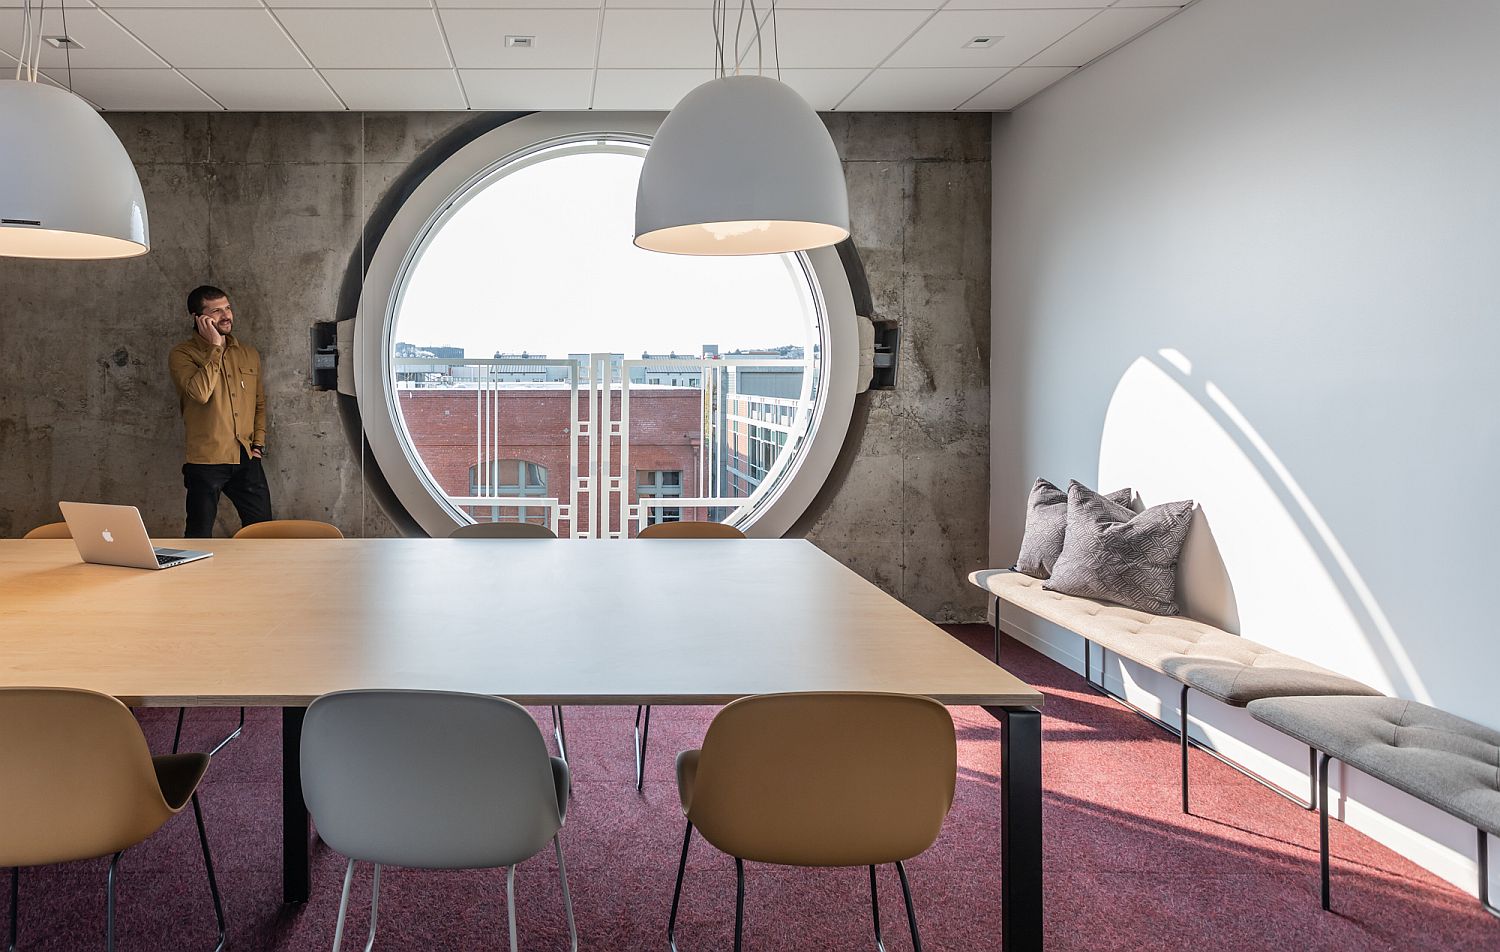 Circular windows and concrete walls inside the modern minimal office